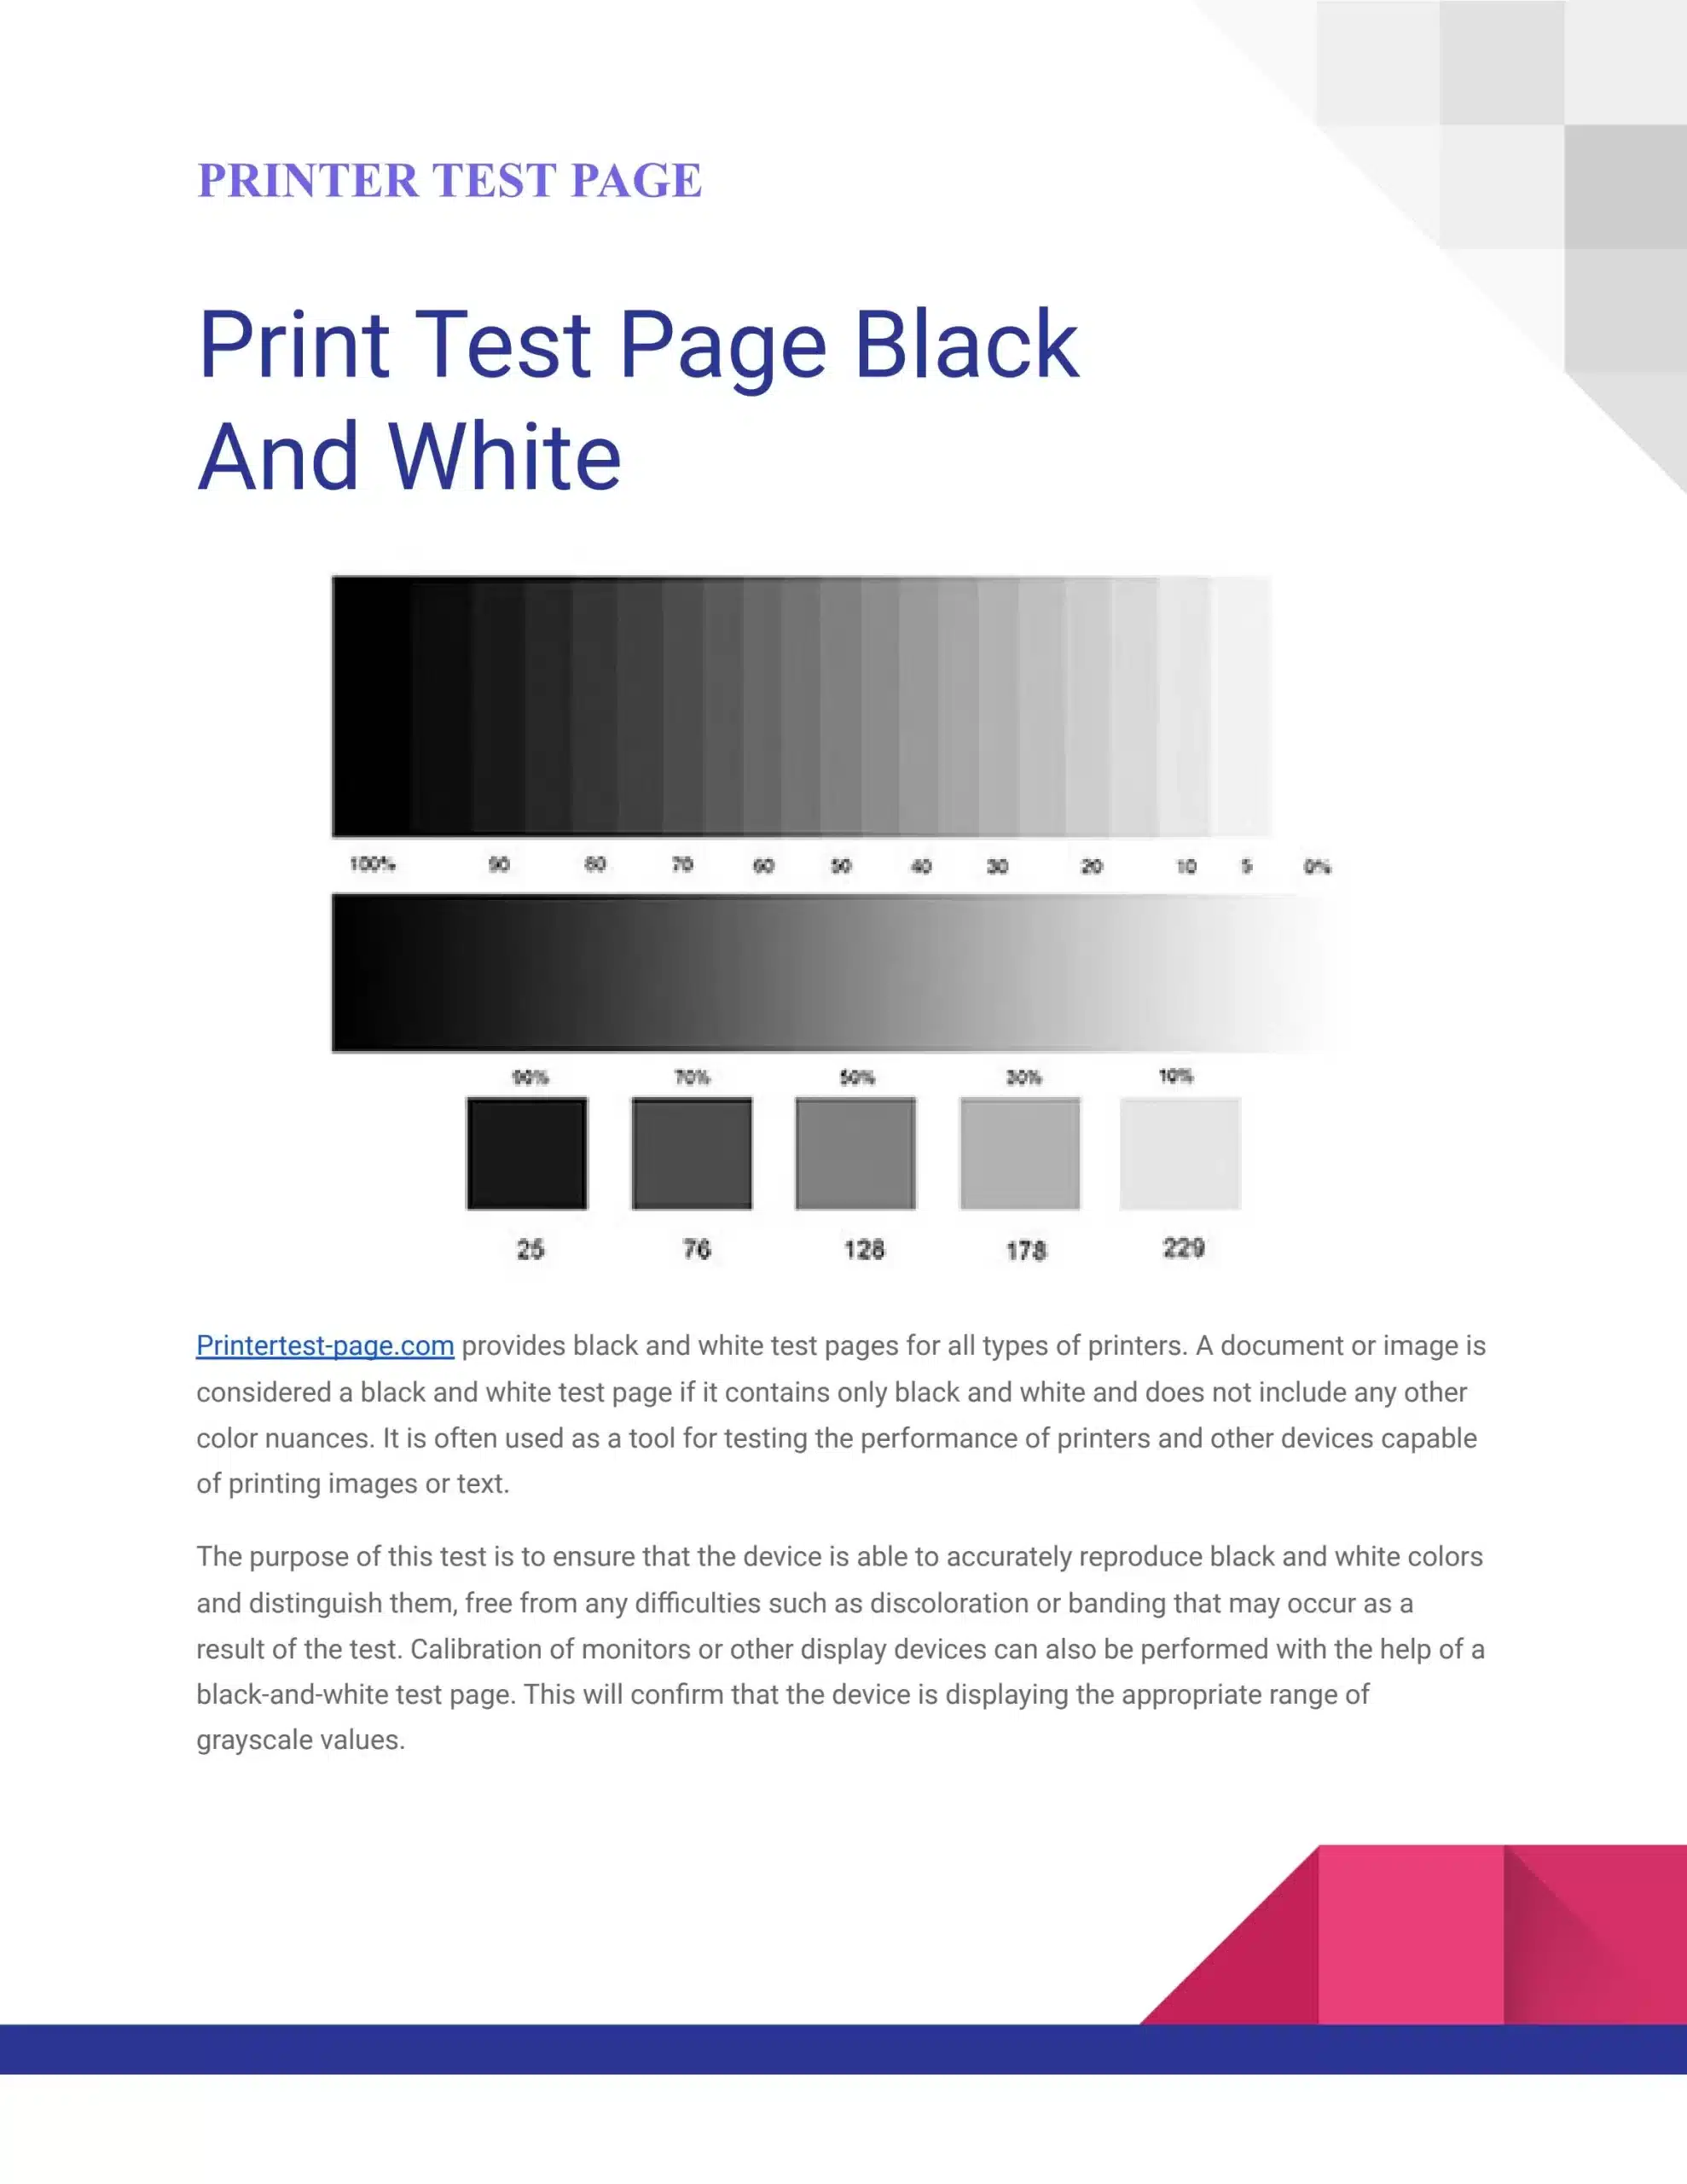 Perform a Test Print